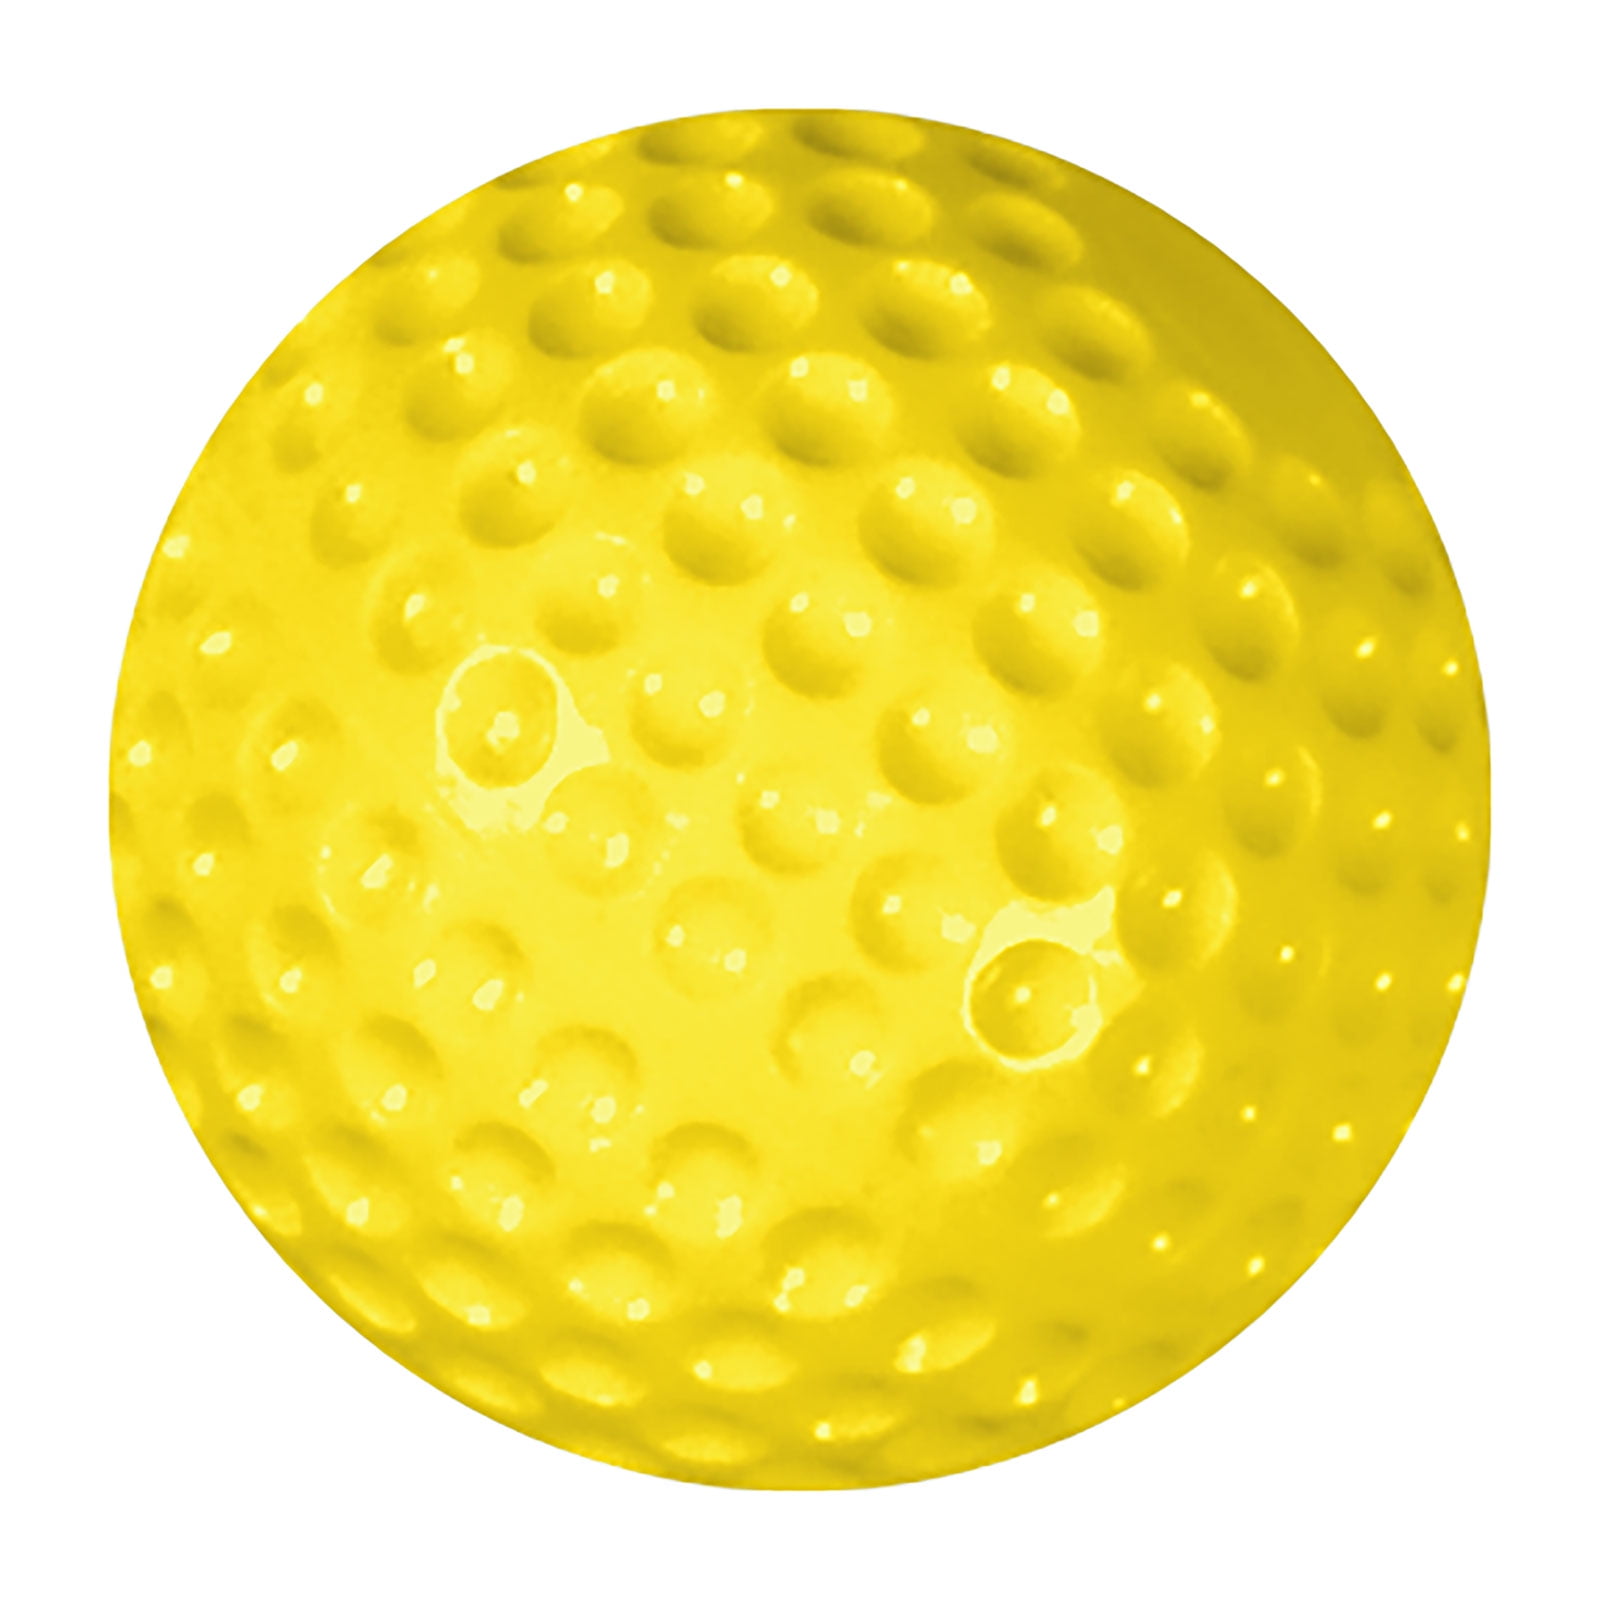 Rawlings Yellow Dimple Pitching Machine Ball